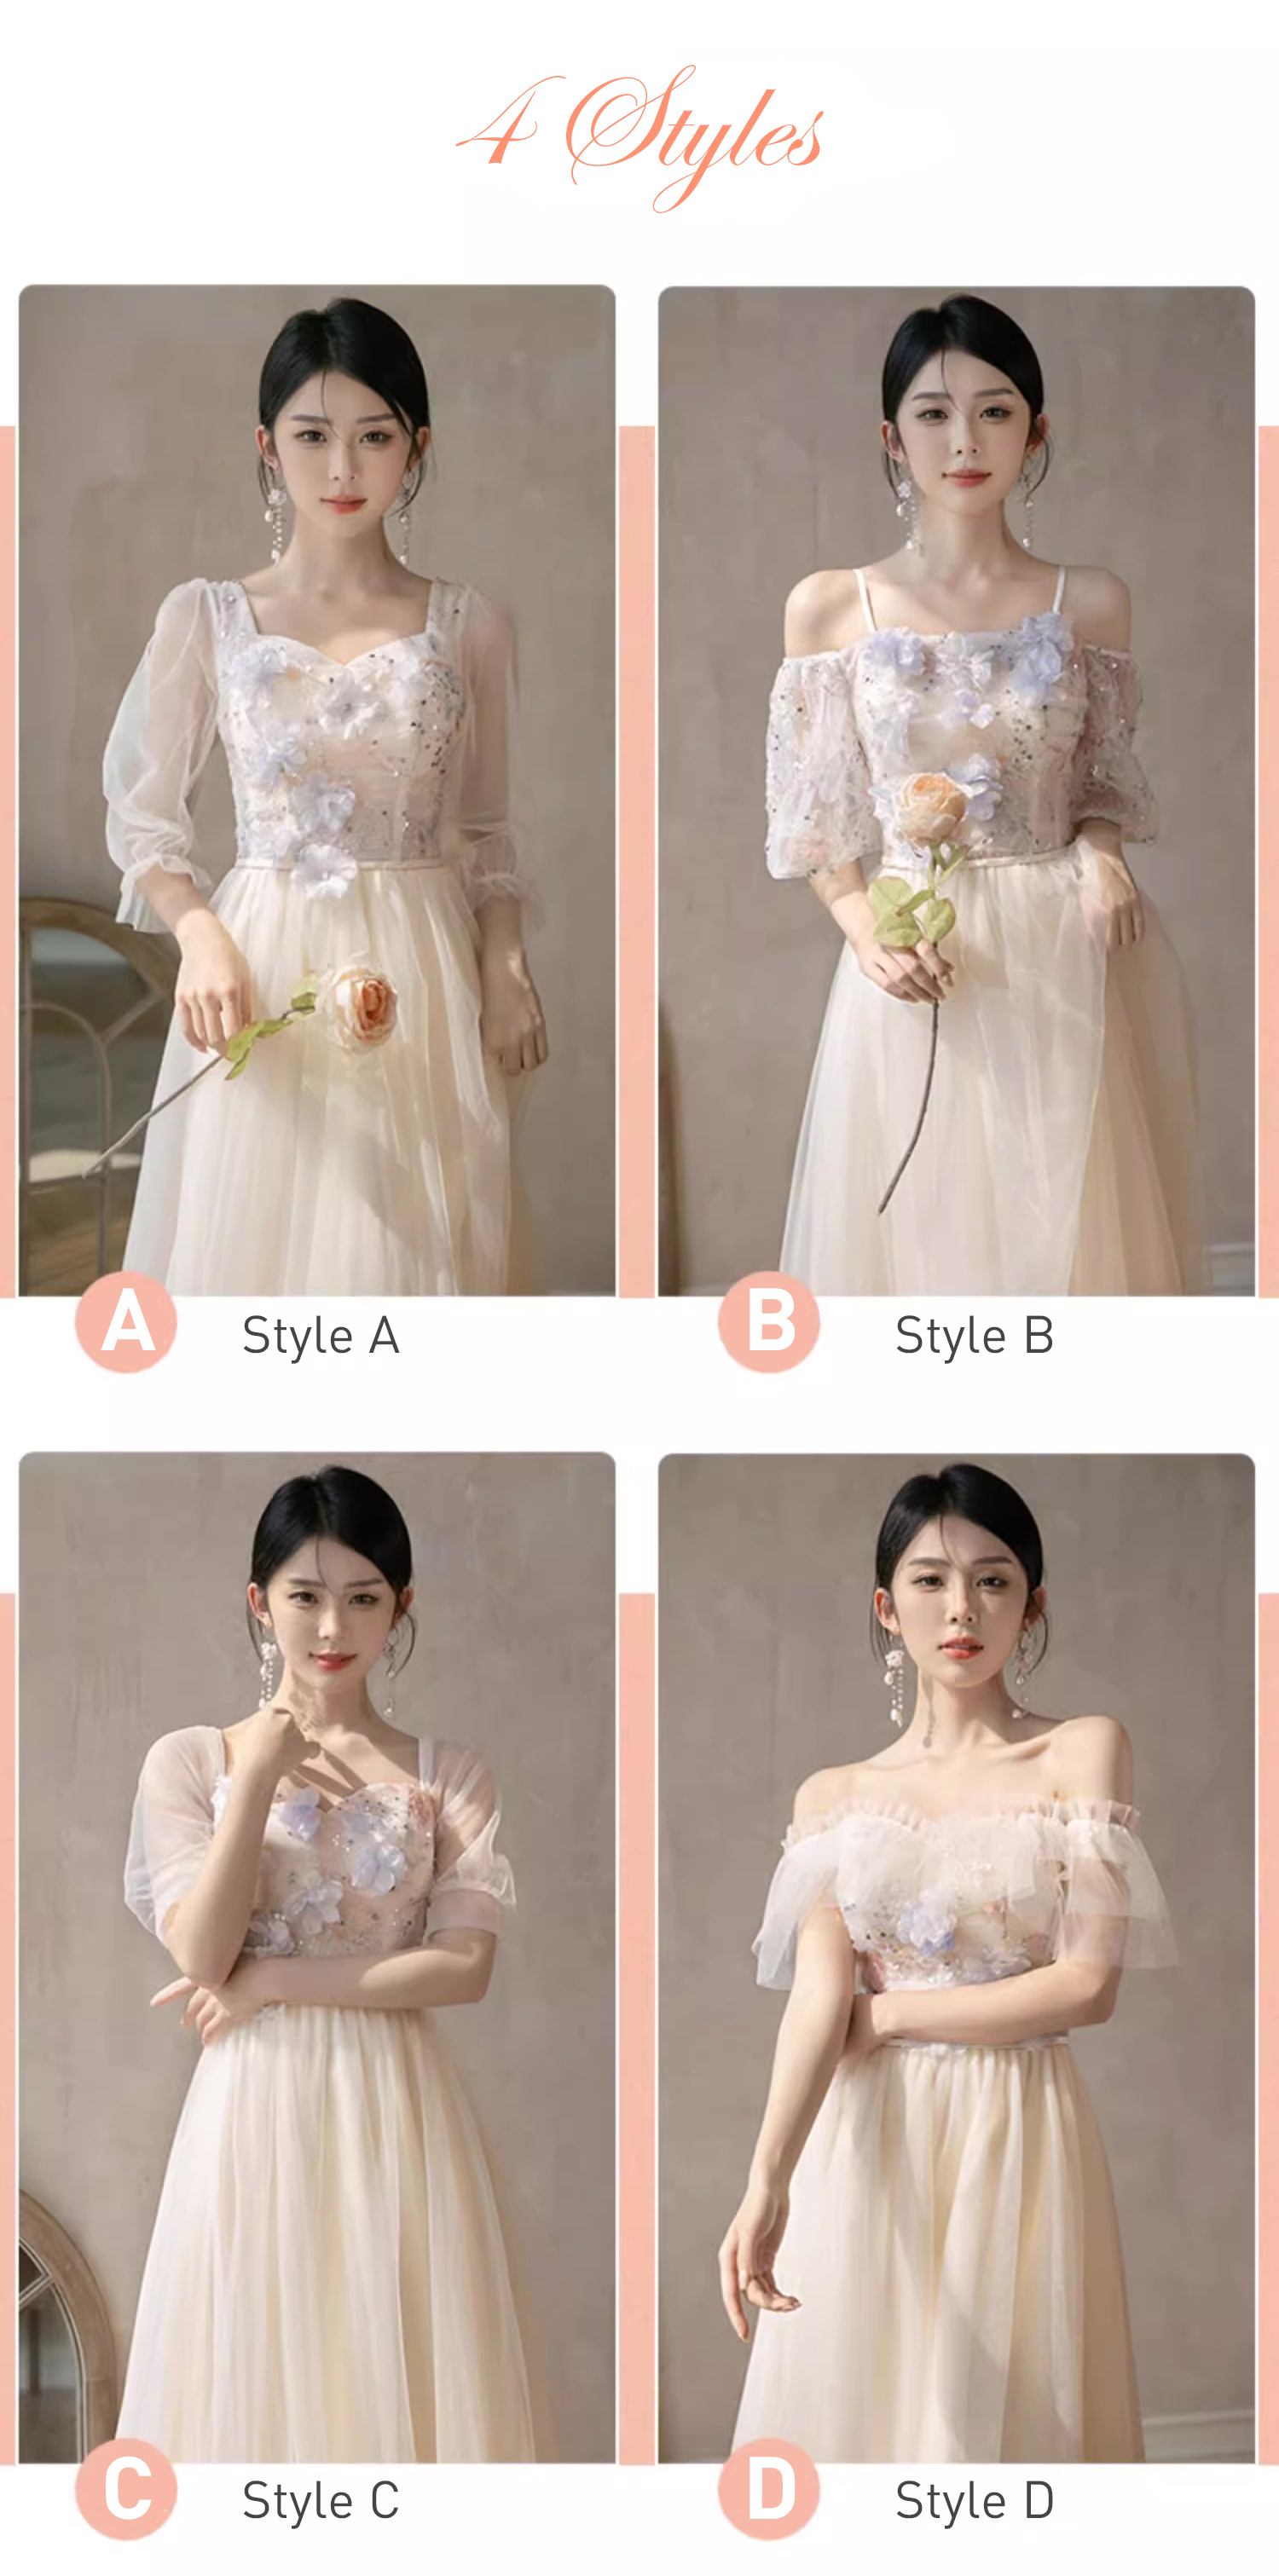 Romance-Flower-Champagne-Bridal-Party-Gown-Fashion-Bridesmaid-Dress13